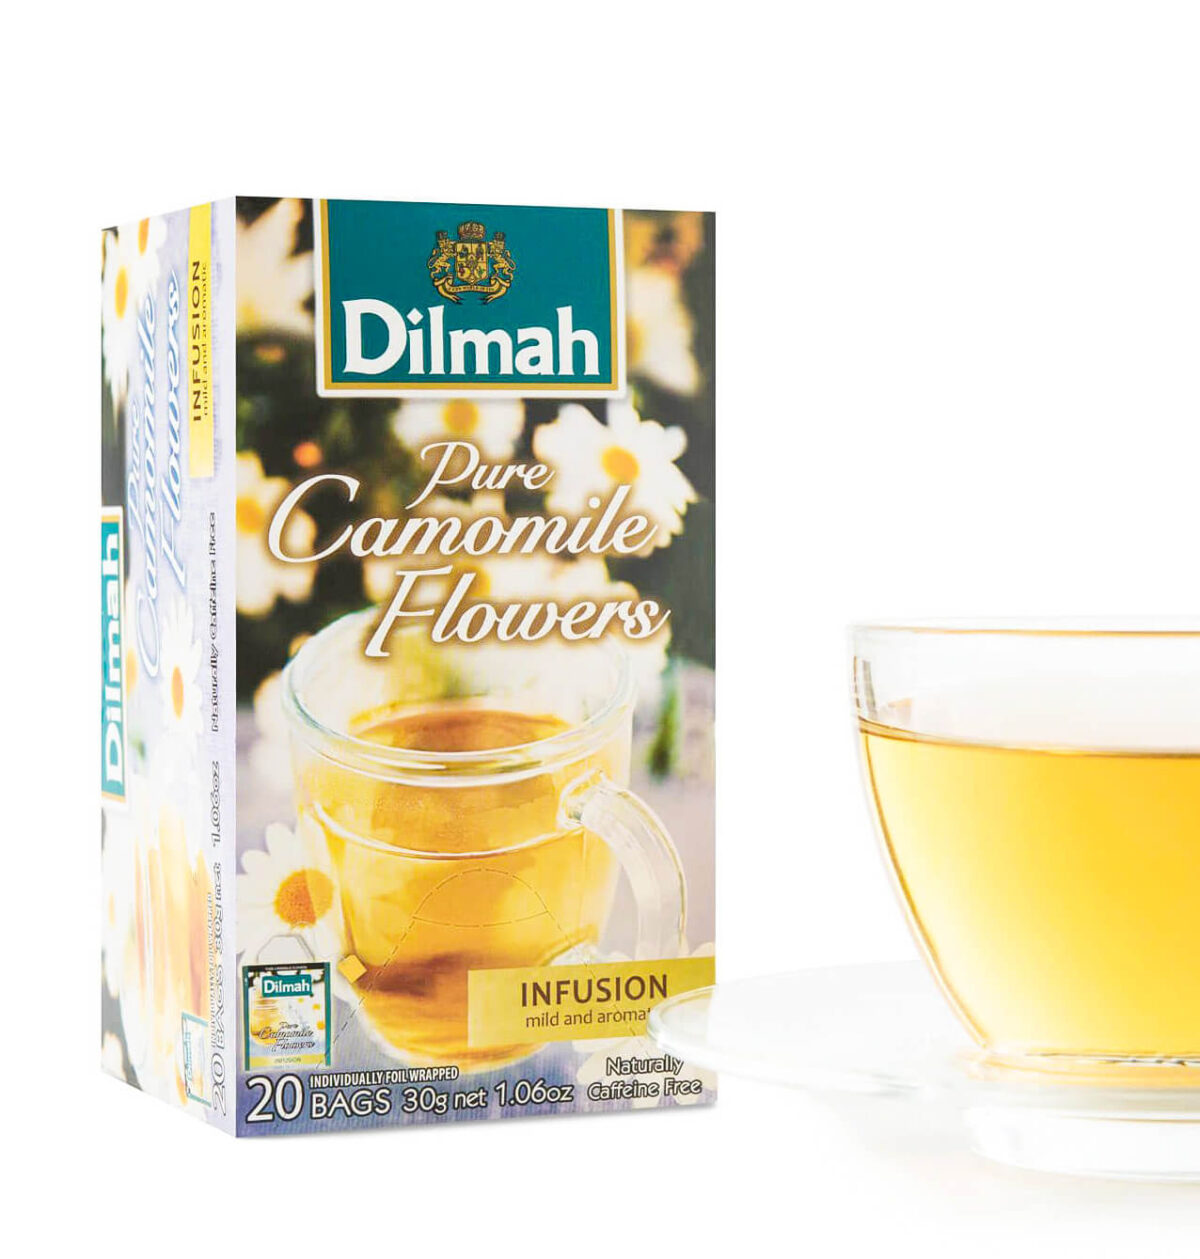 Dilmah ceylon pure camomile flowers tea